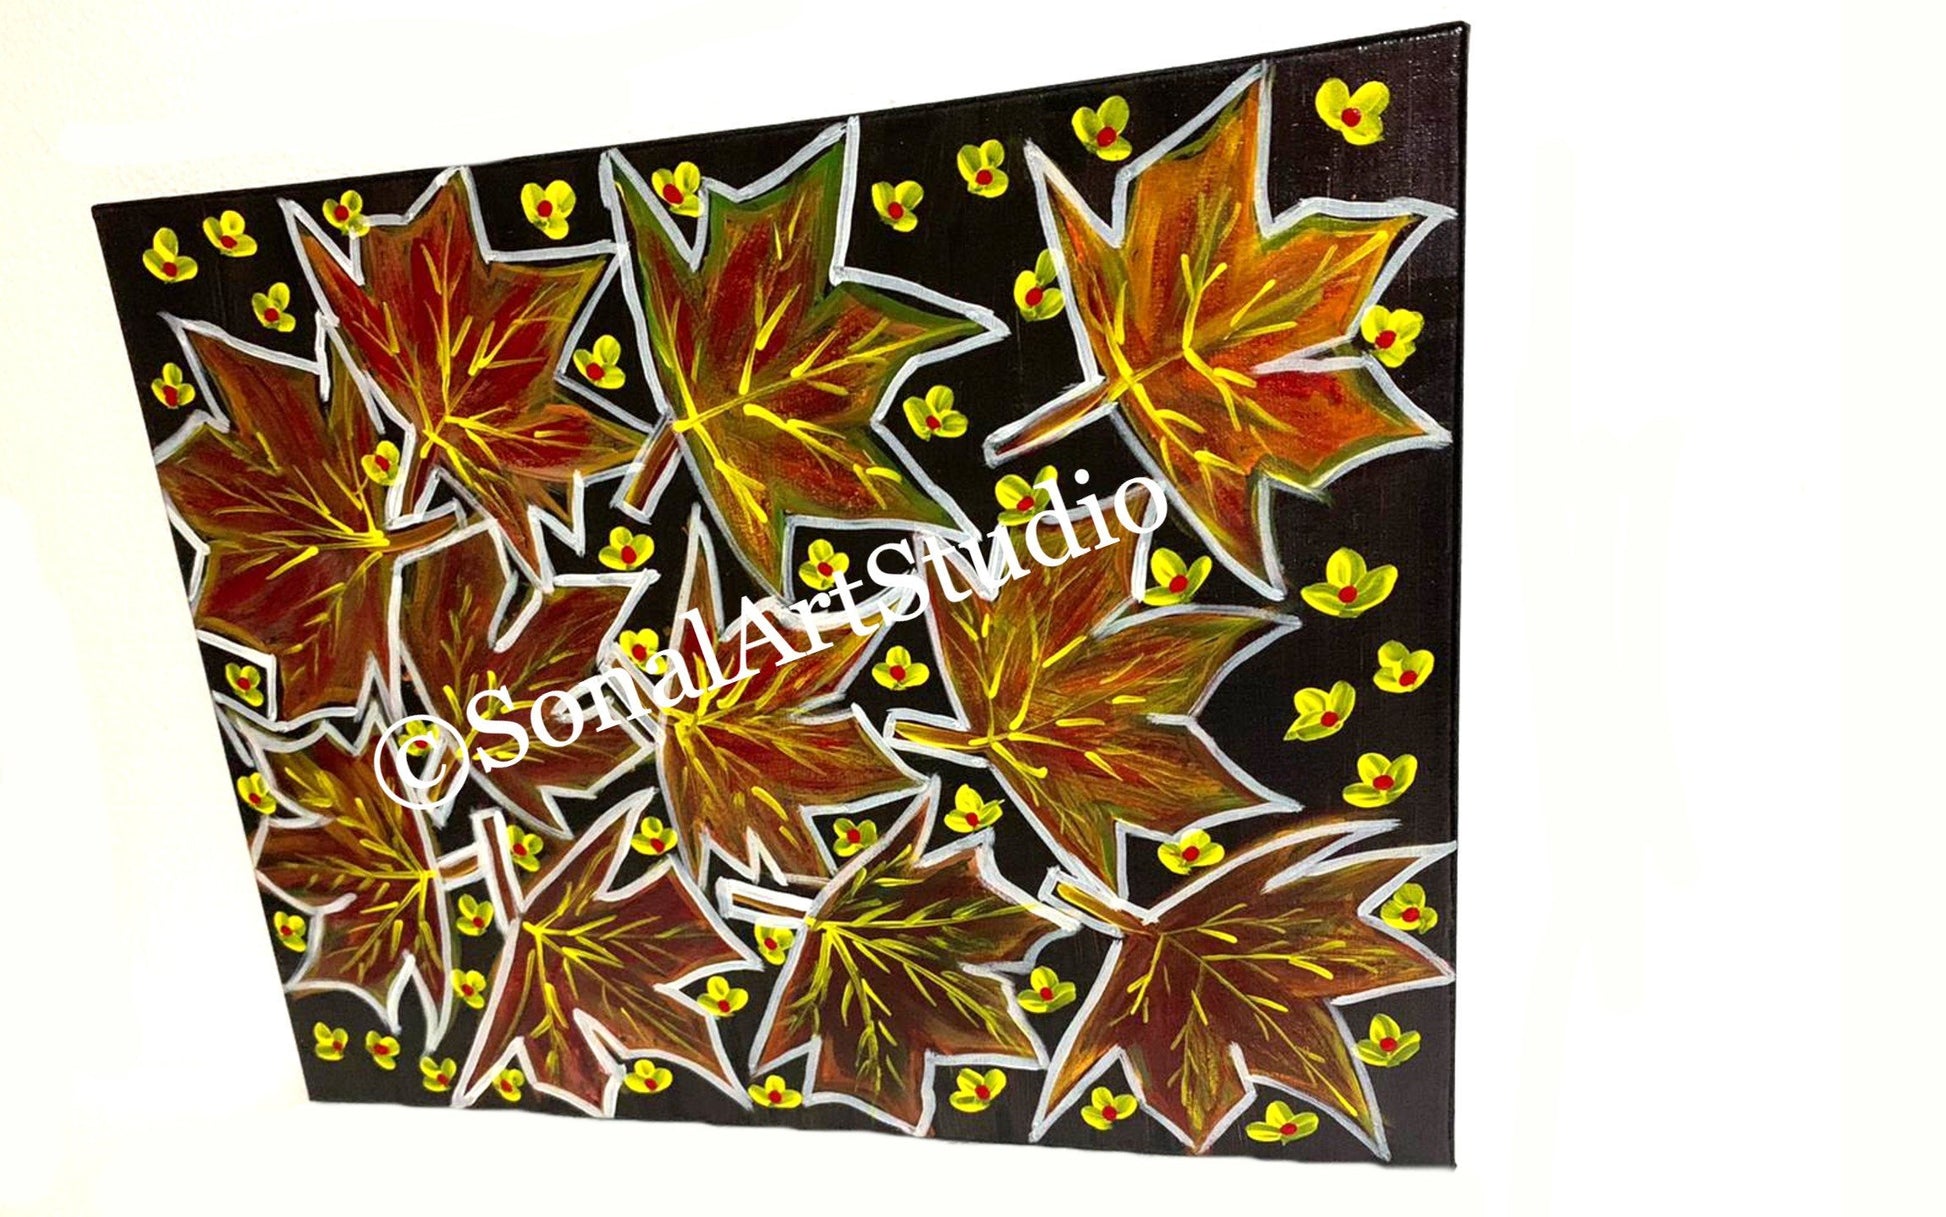 Abstract Maple Leaves - SonalArtStudio